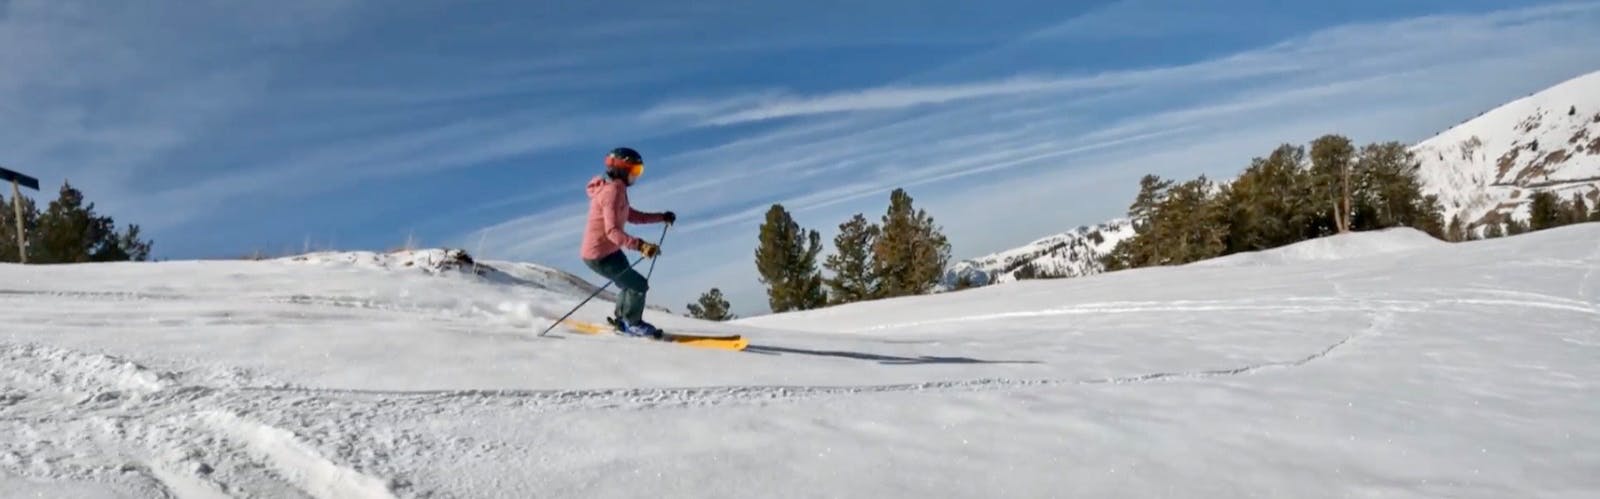 Curated Ski Expert Sara Beeken skiing on the Fischer Ranger 96 Women's skis at Powder Mountain